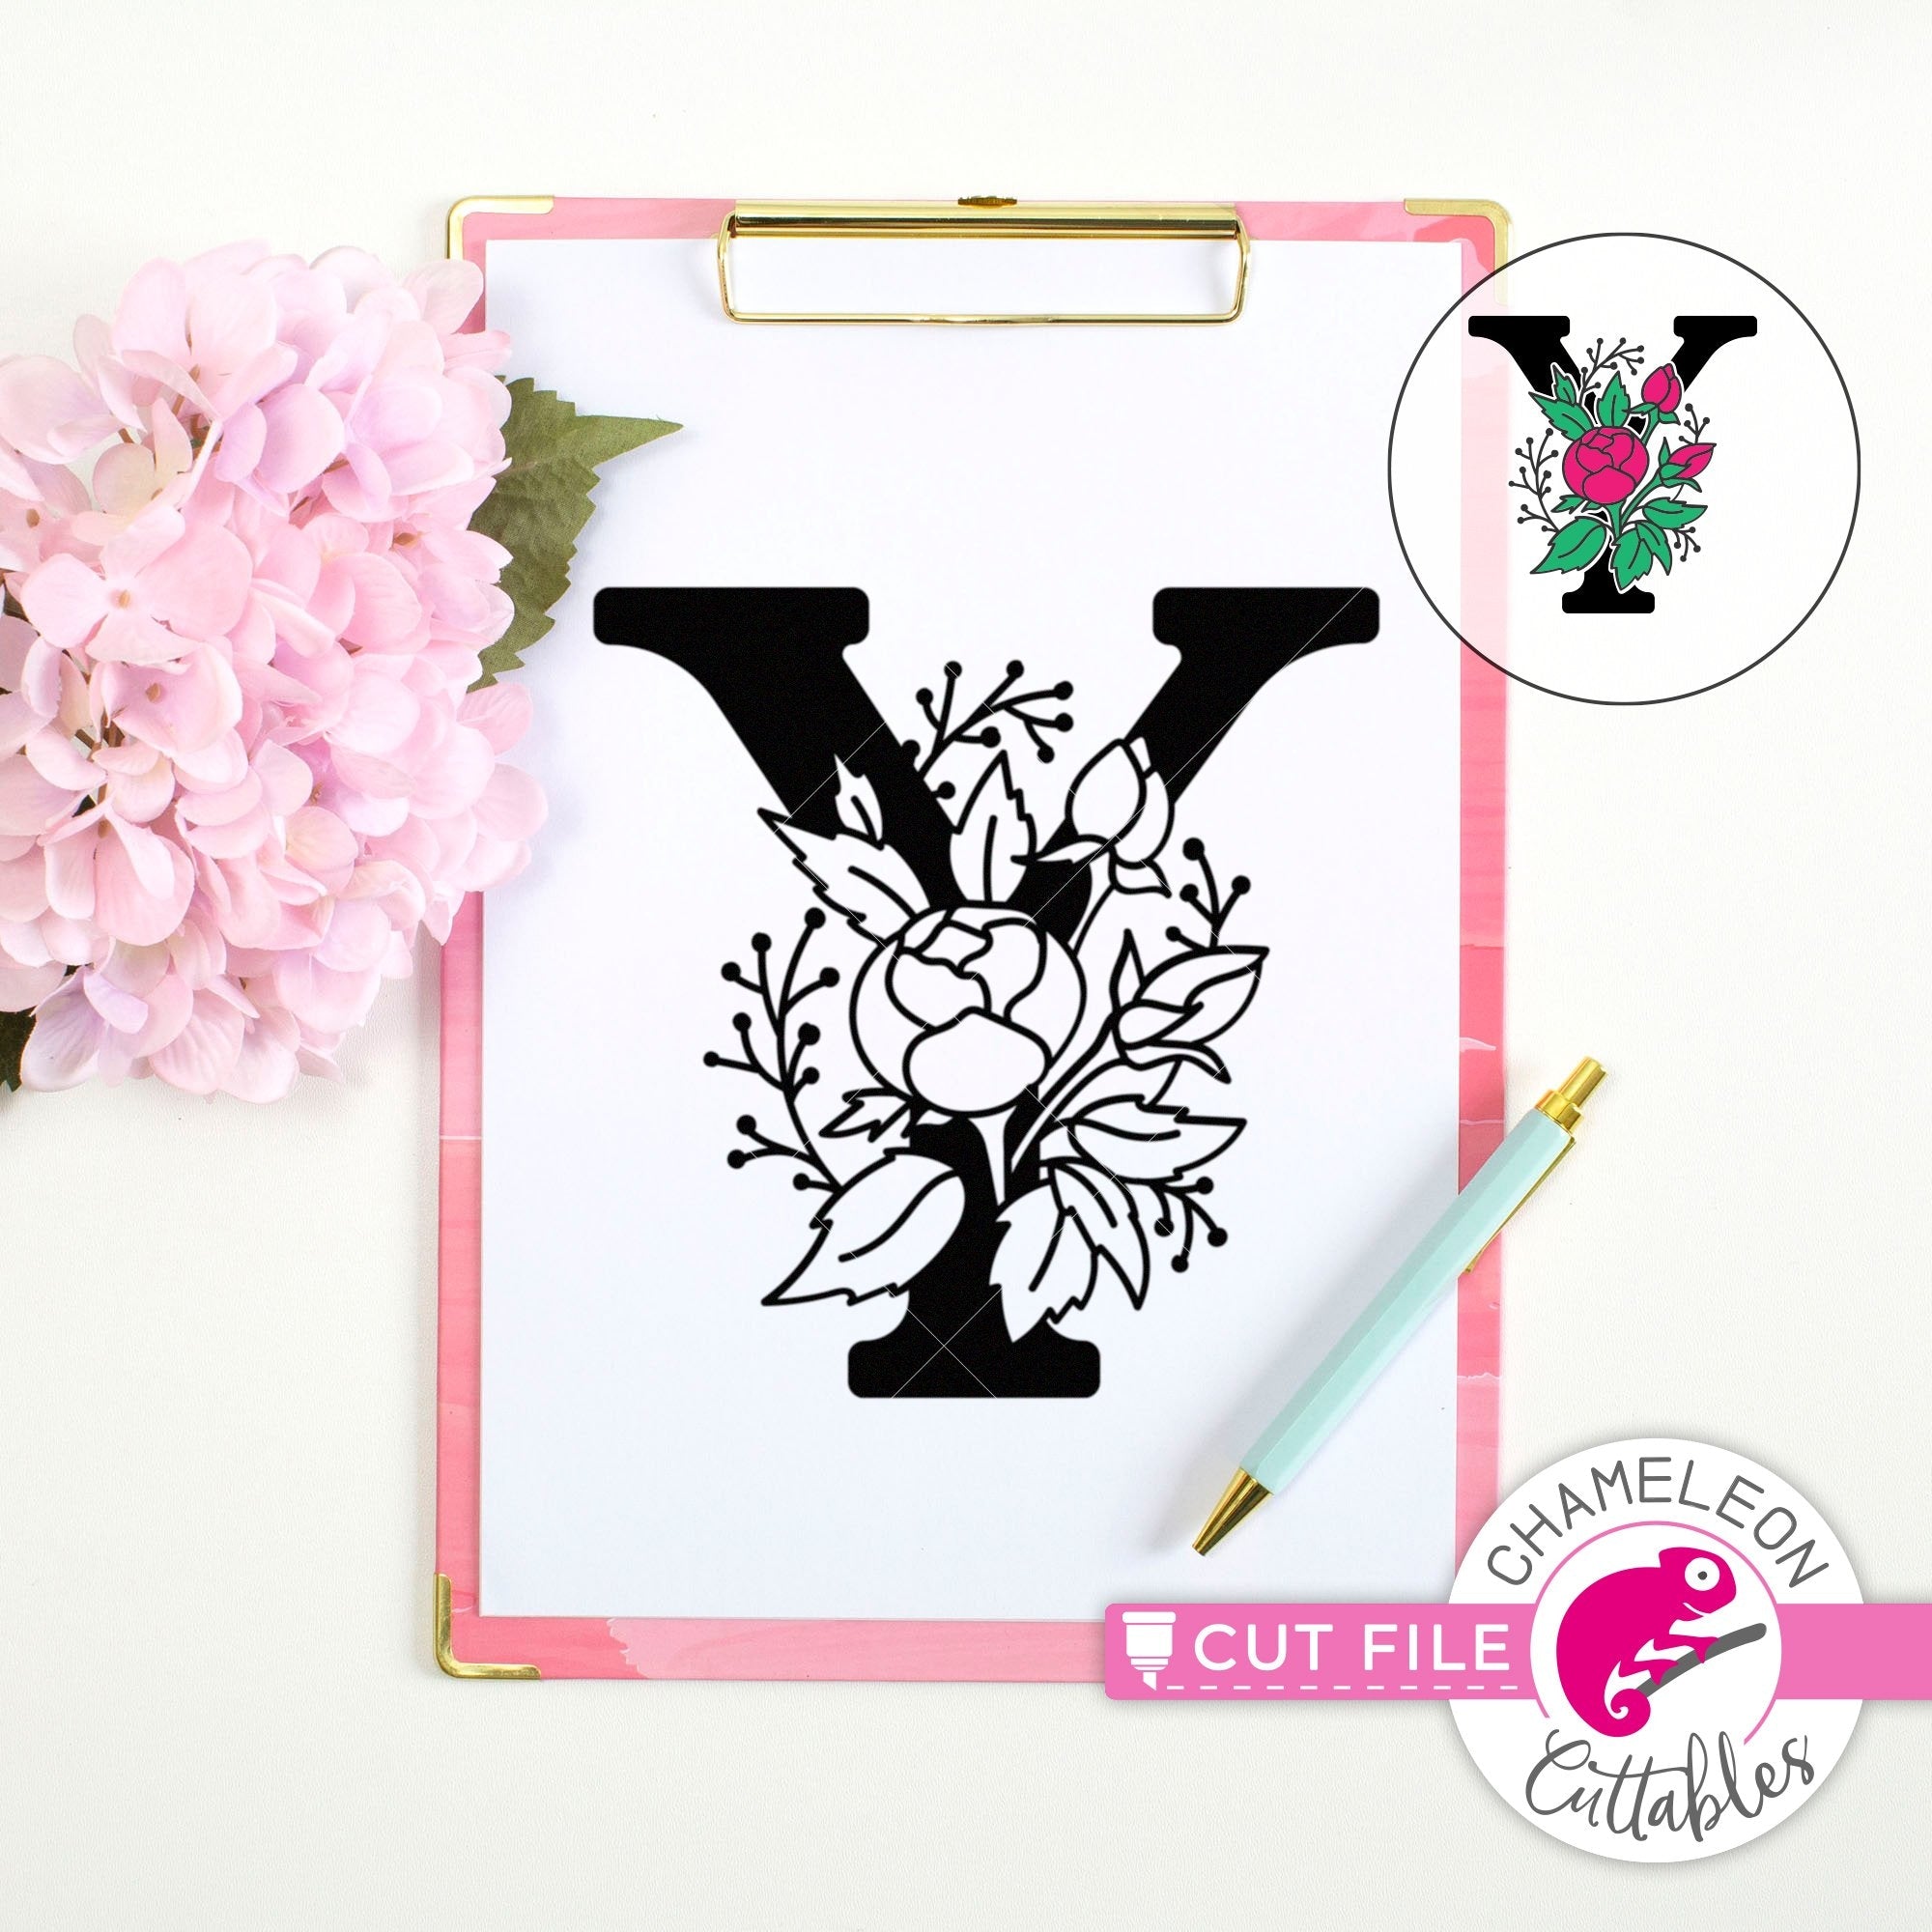 Y logo, Letter Y monogram, style floral (2315829)